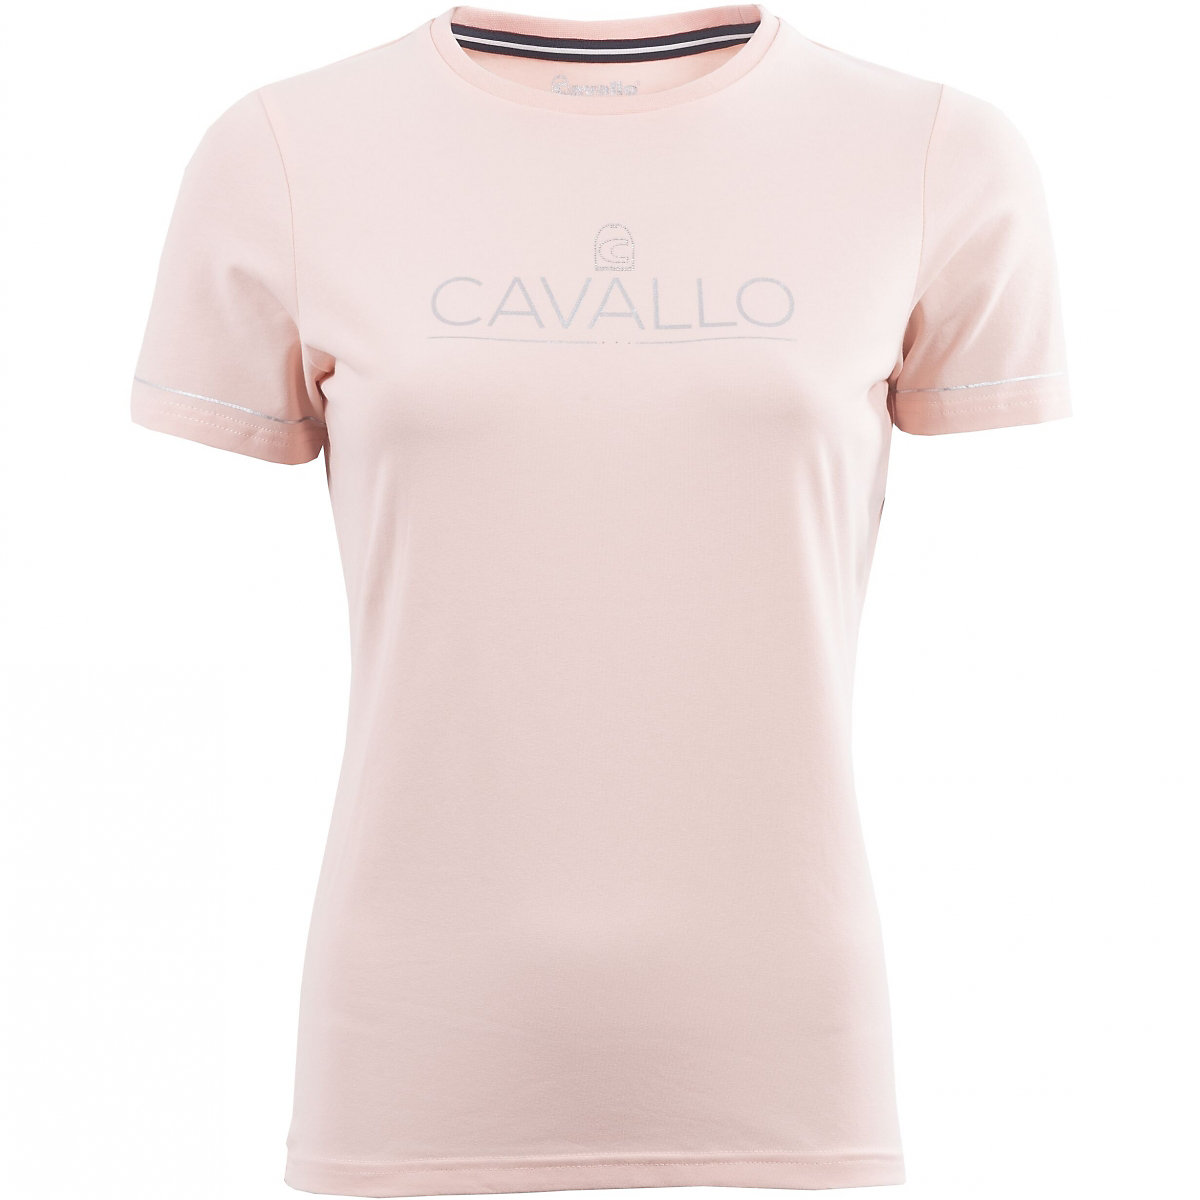 Cavallo Cavallo FERUN Auffälliges Damen T-Shirt bright salmon Sportswear FS 23 46 rosa